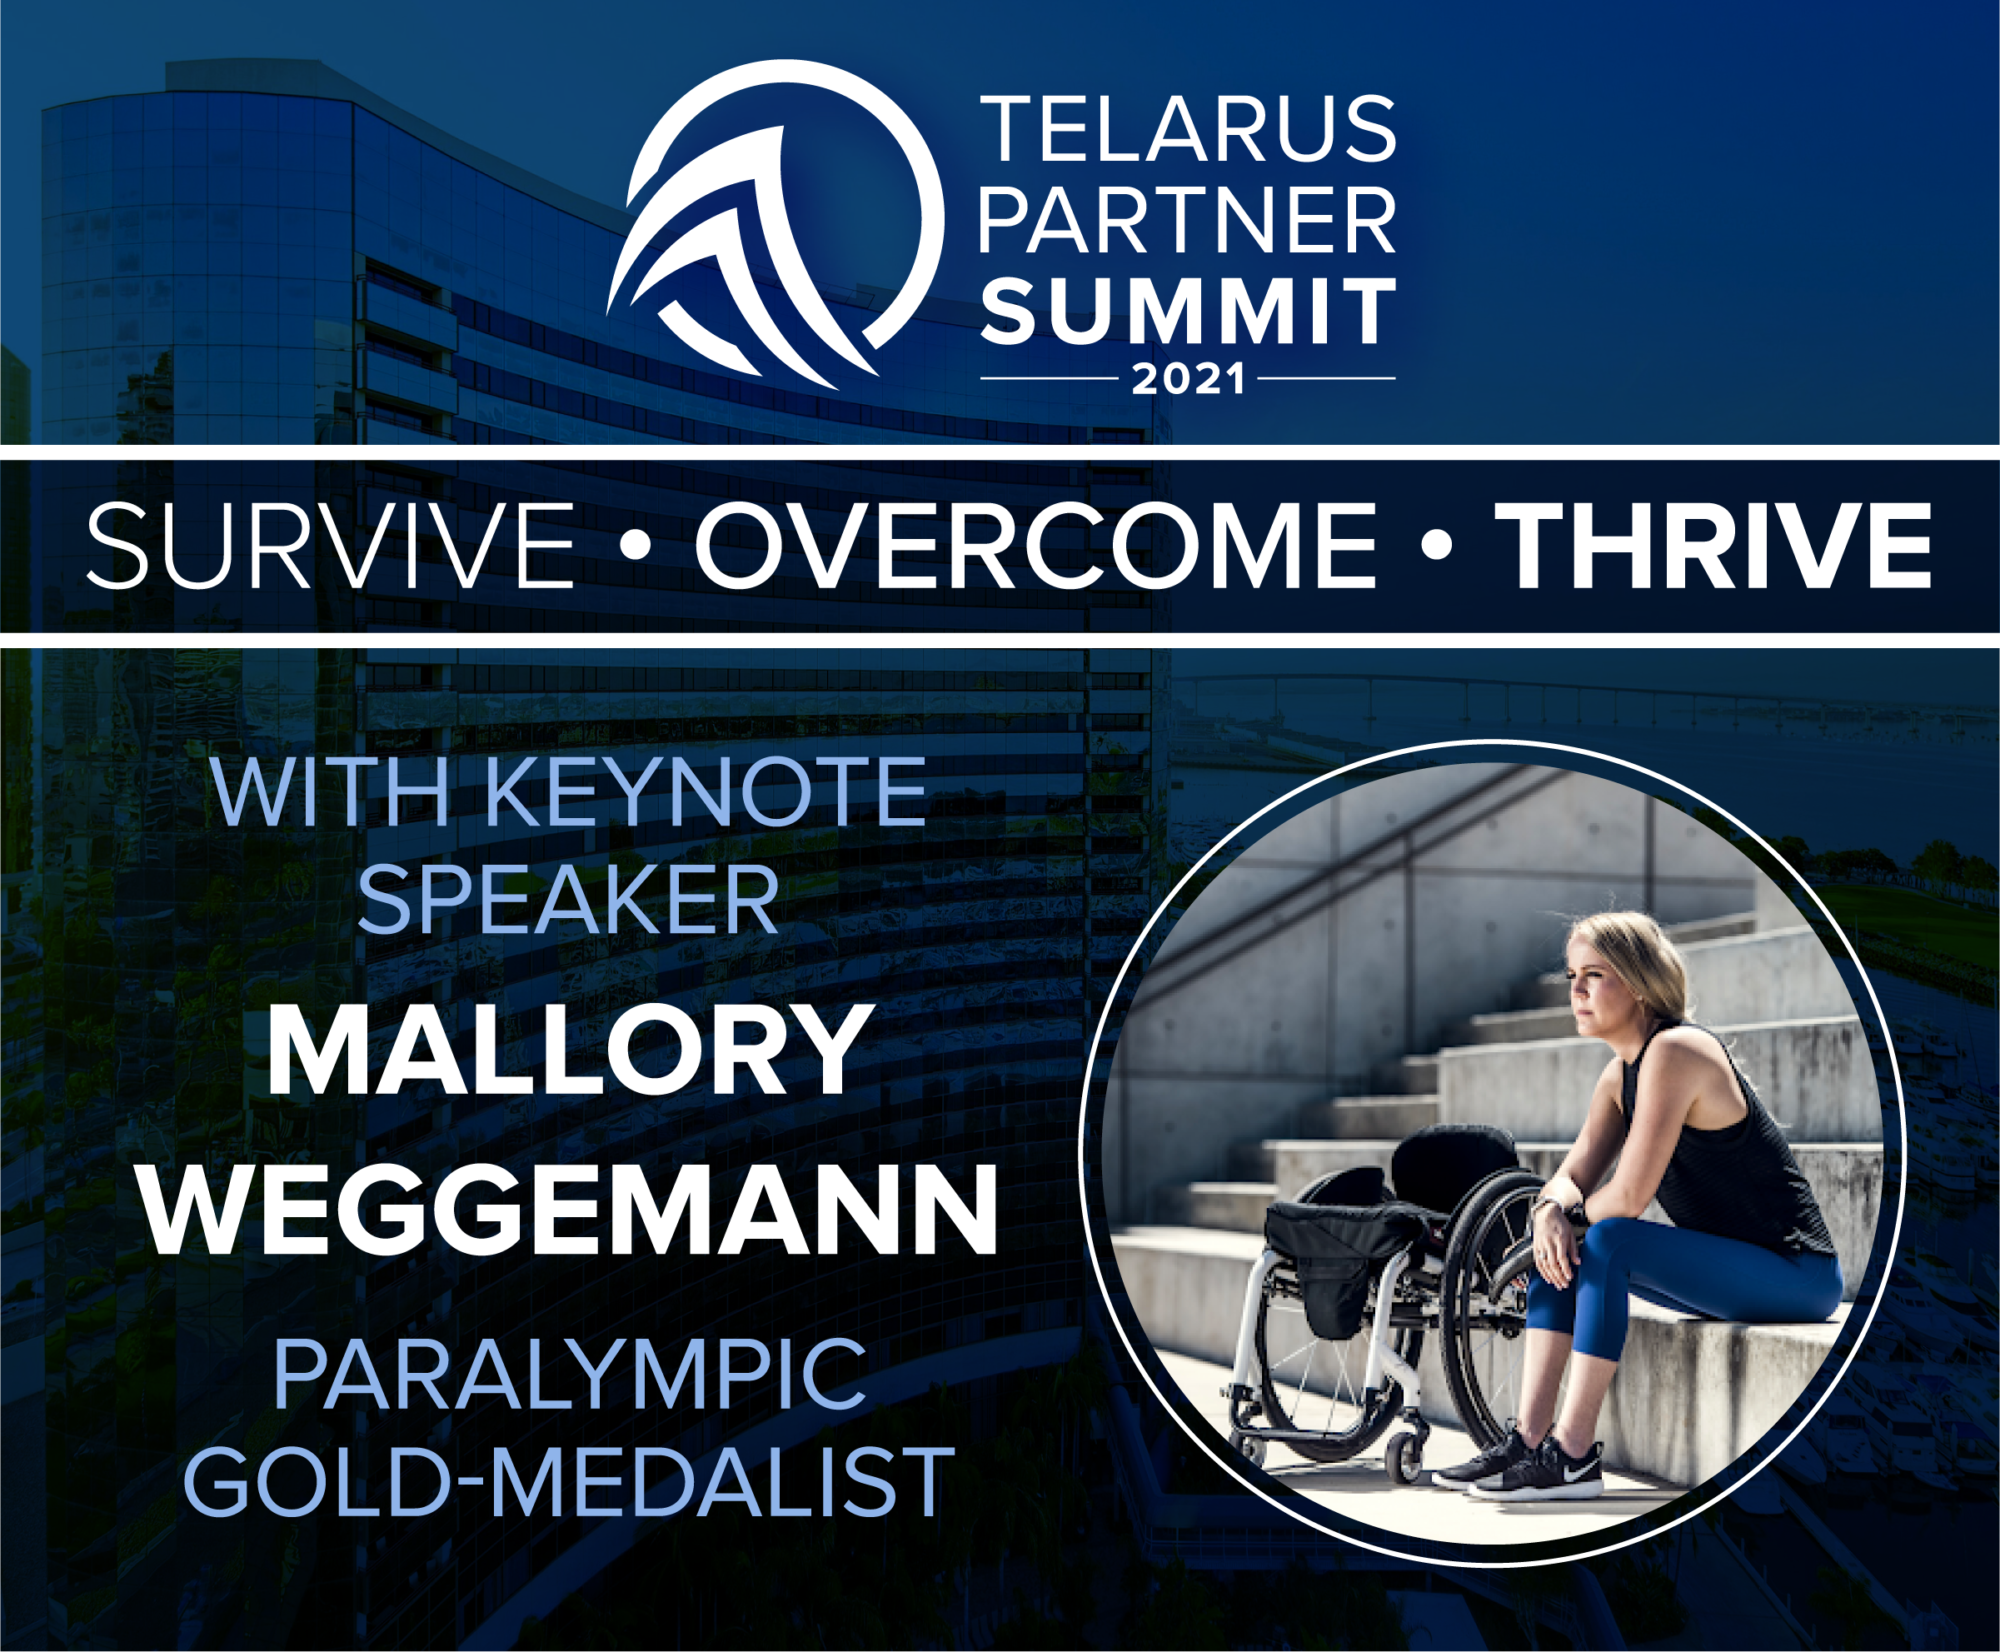 Telarus Announces Partner Summit Theme and Opening Keynote Speaker